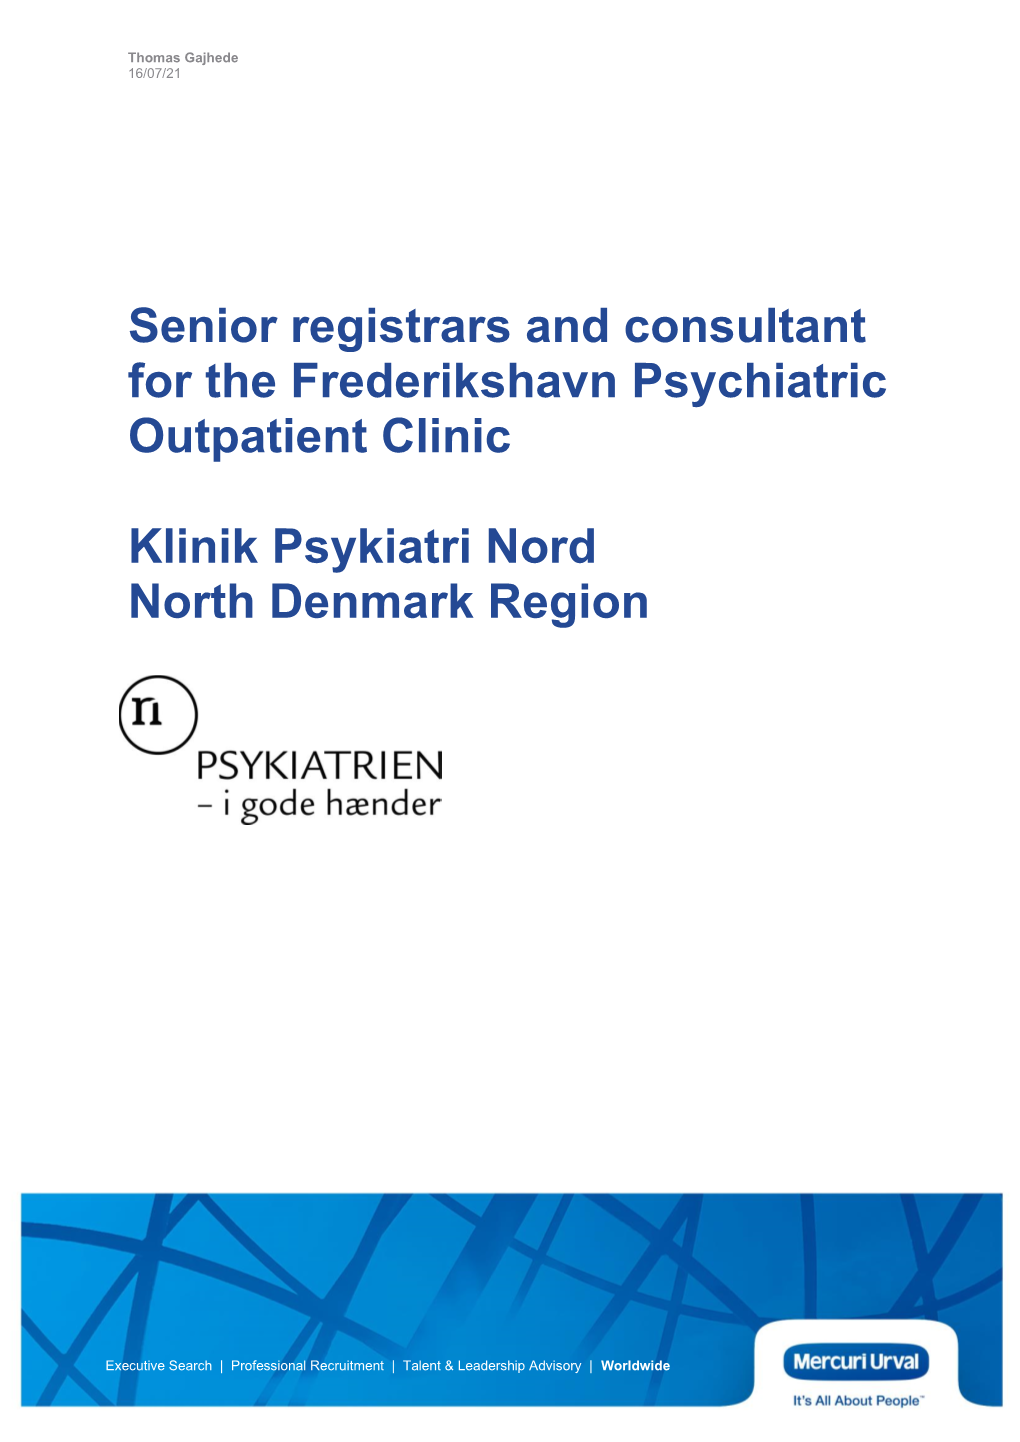 Senior Registrars and Consultant for the Frederikshavn Psychiatric Outpatient Clinic